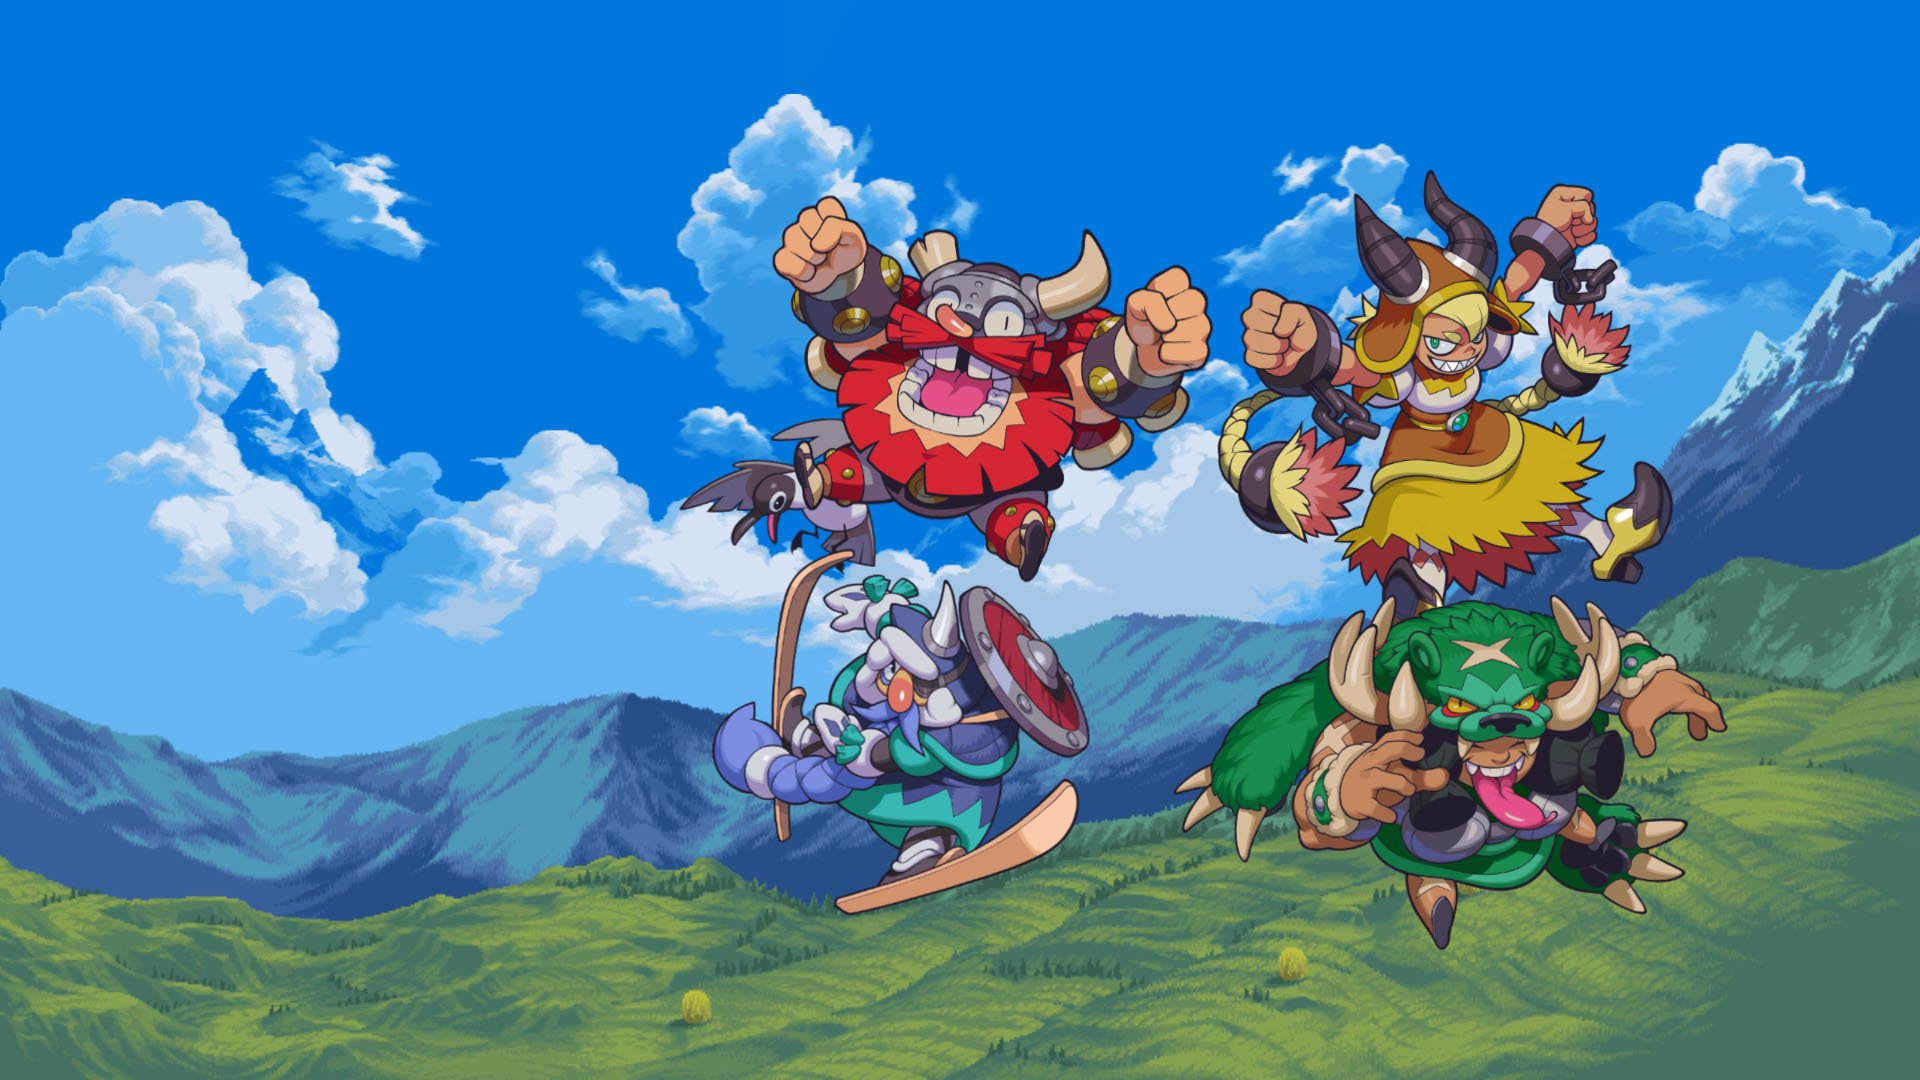 Vikings on Trampolines: jogo de plataforma 2D promete diversão